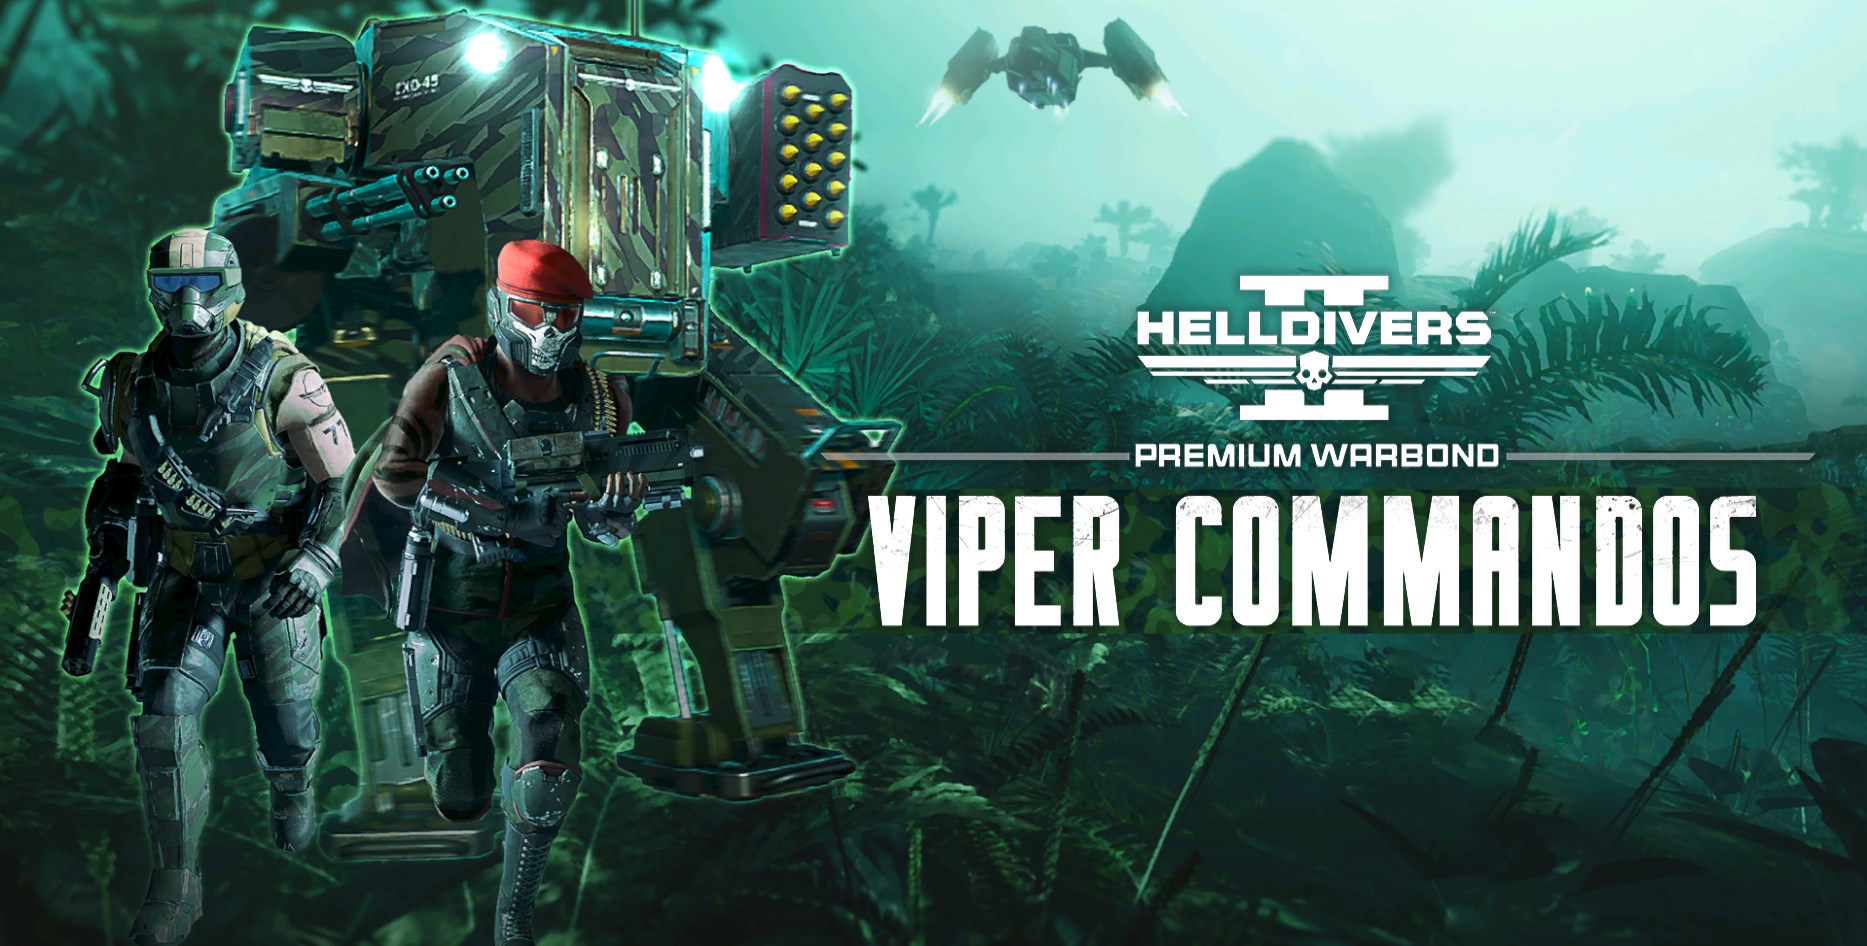 Viper Commandos Premium Warbond Cover Image.jpg